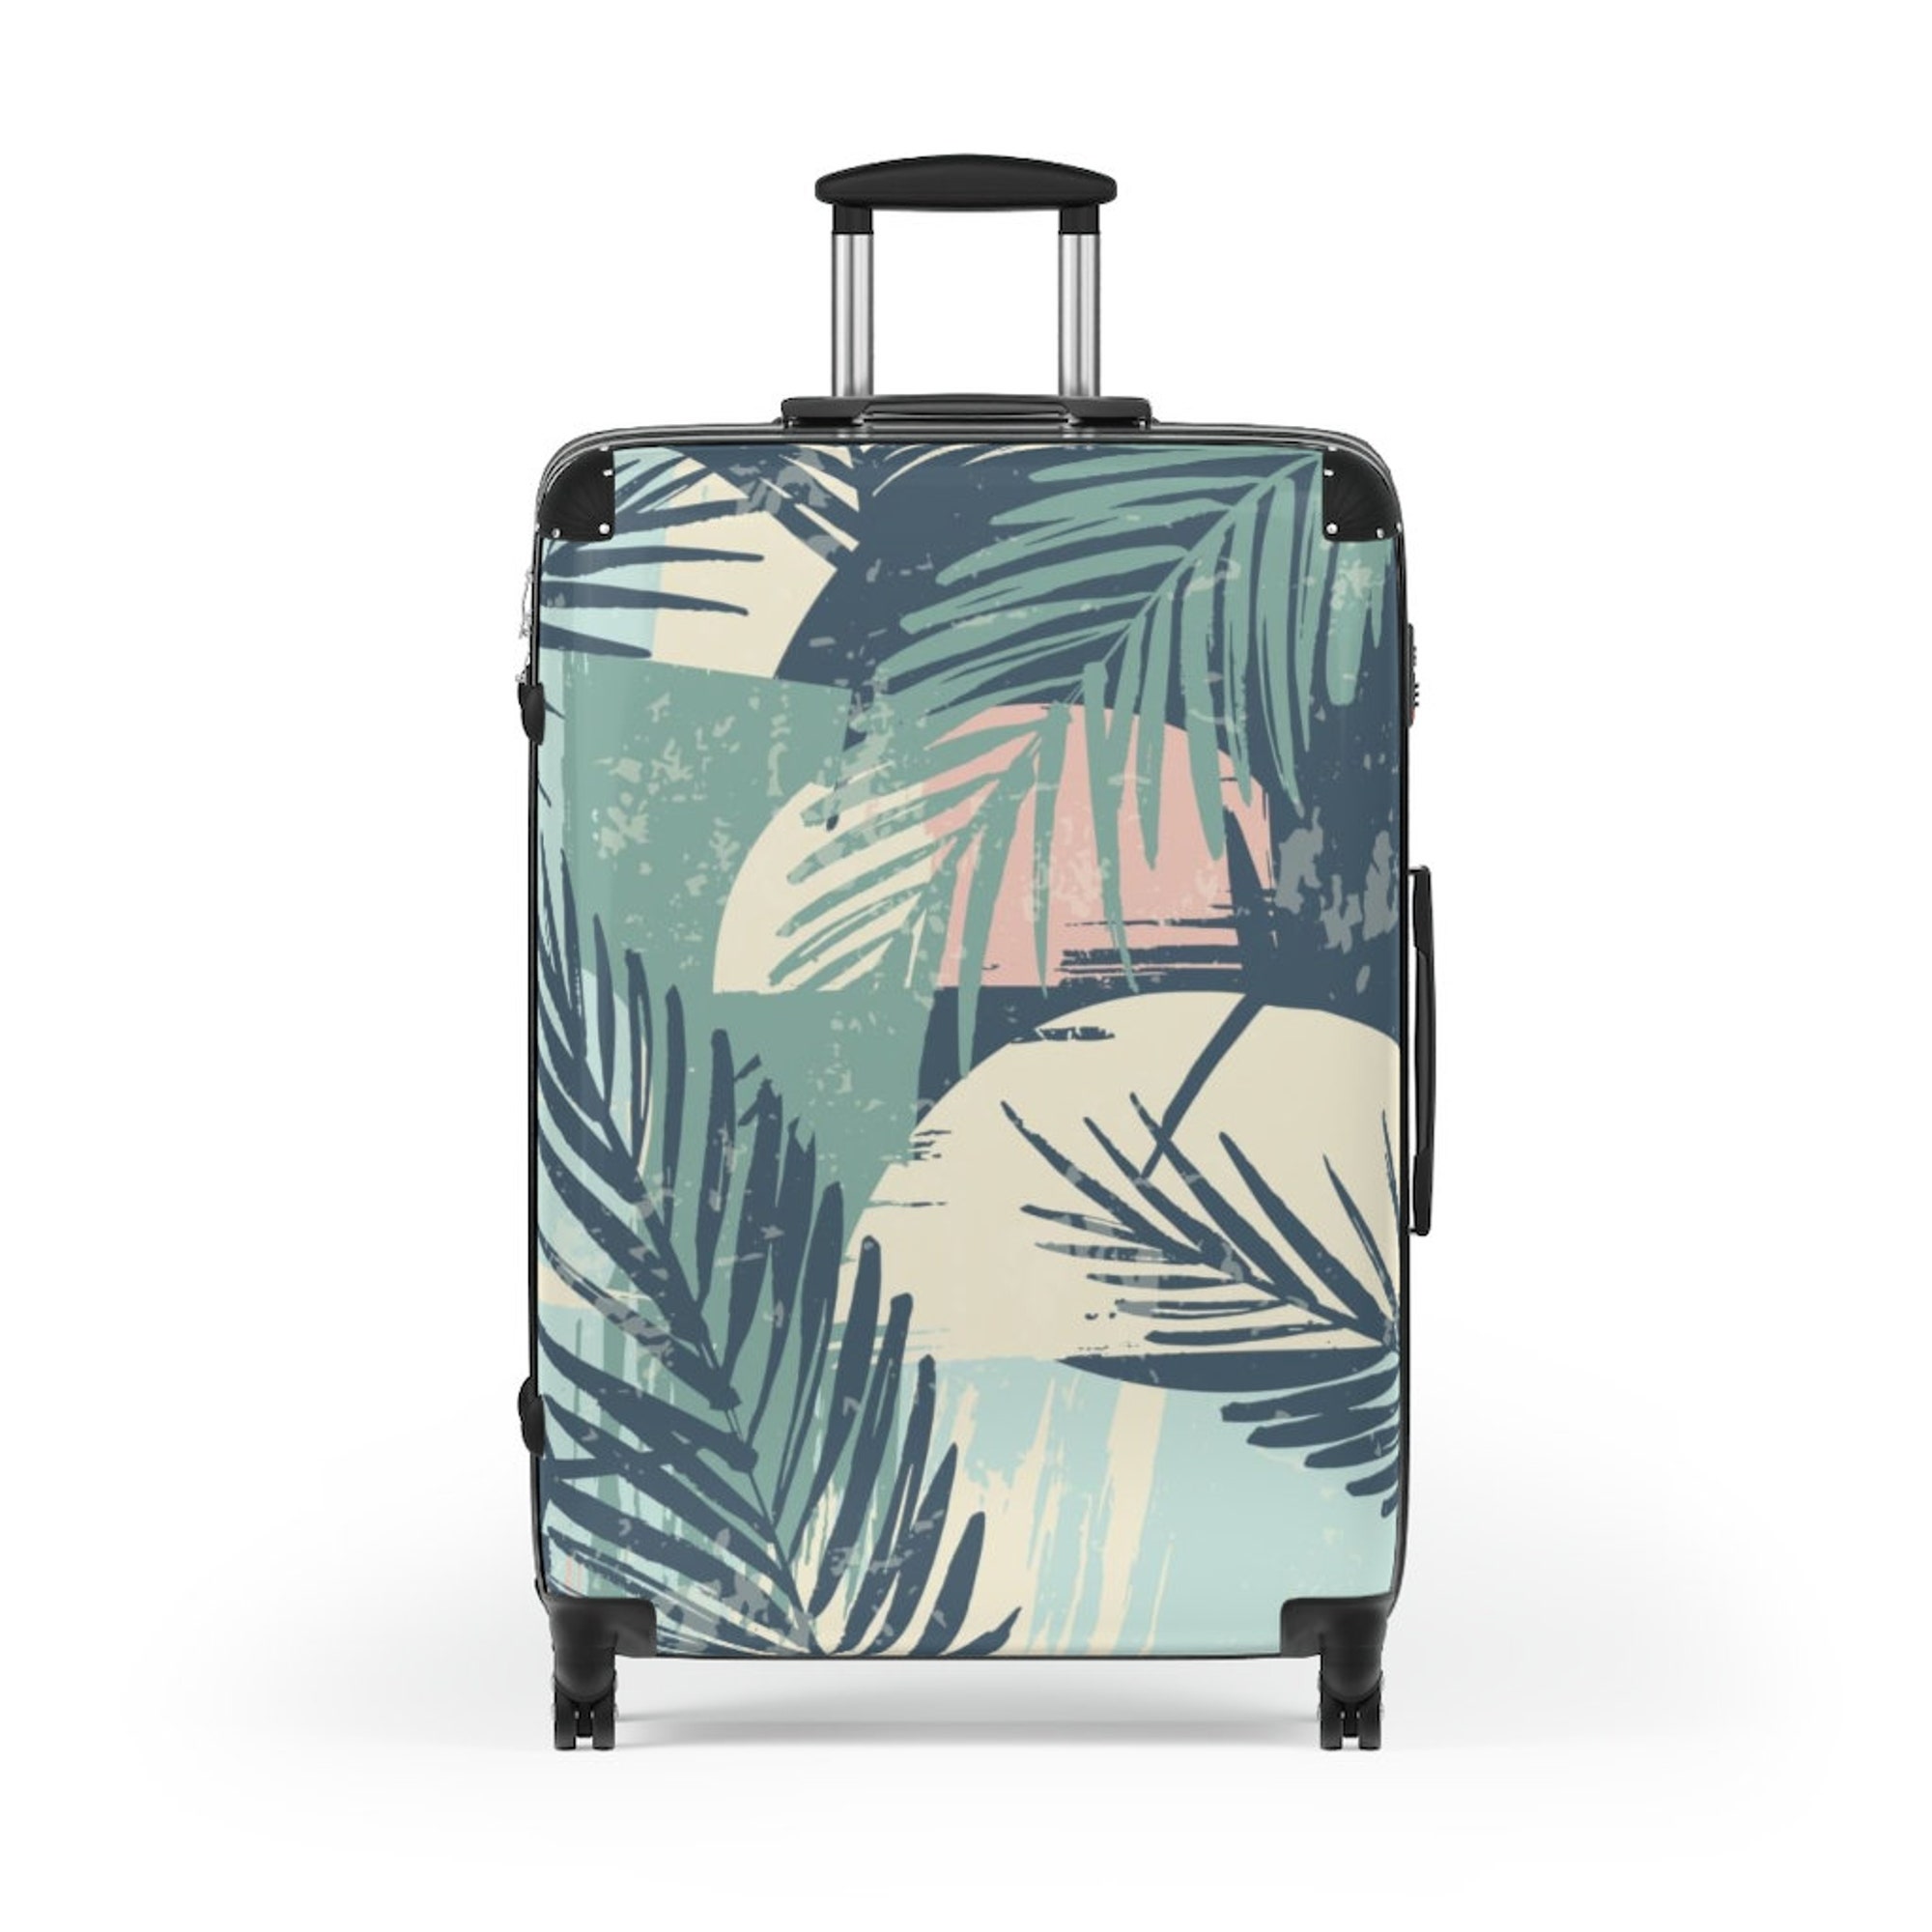 The Kona Suitcase